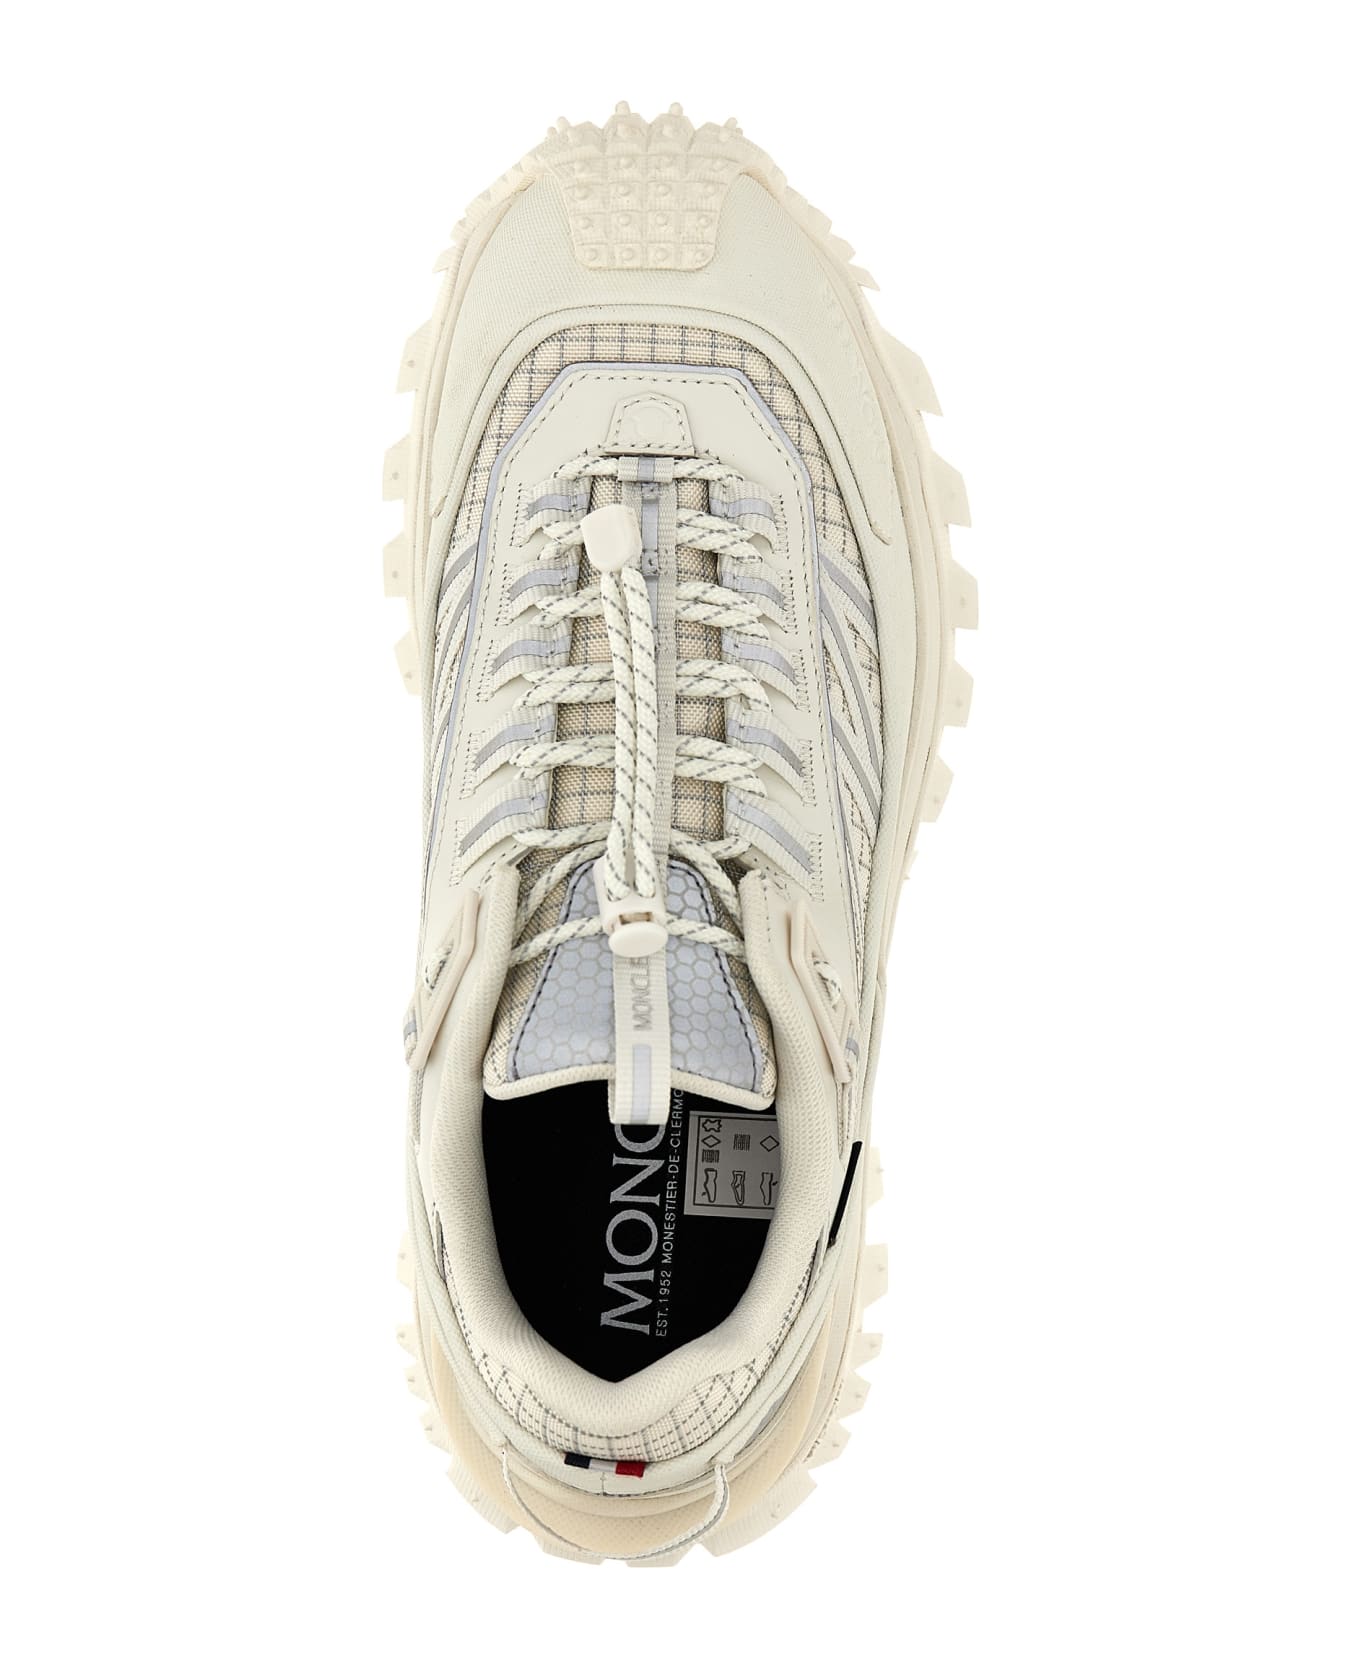 Moncler 'trailgrip Gtx' Sneakers - White